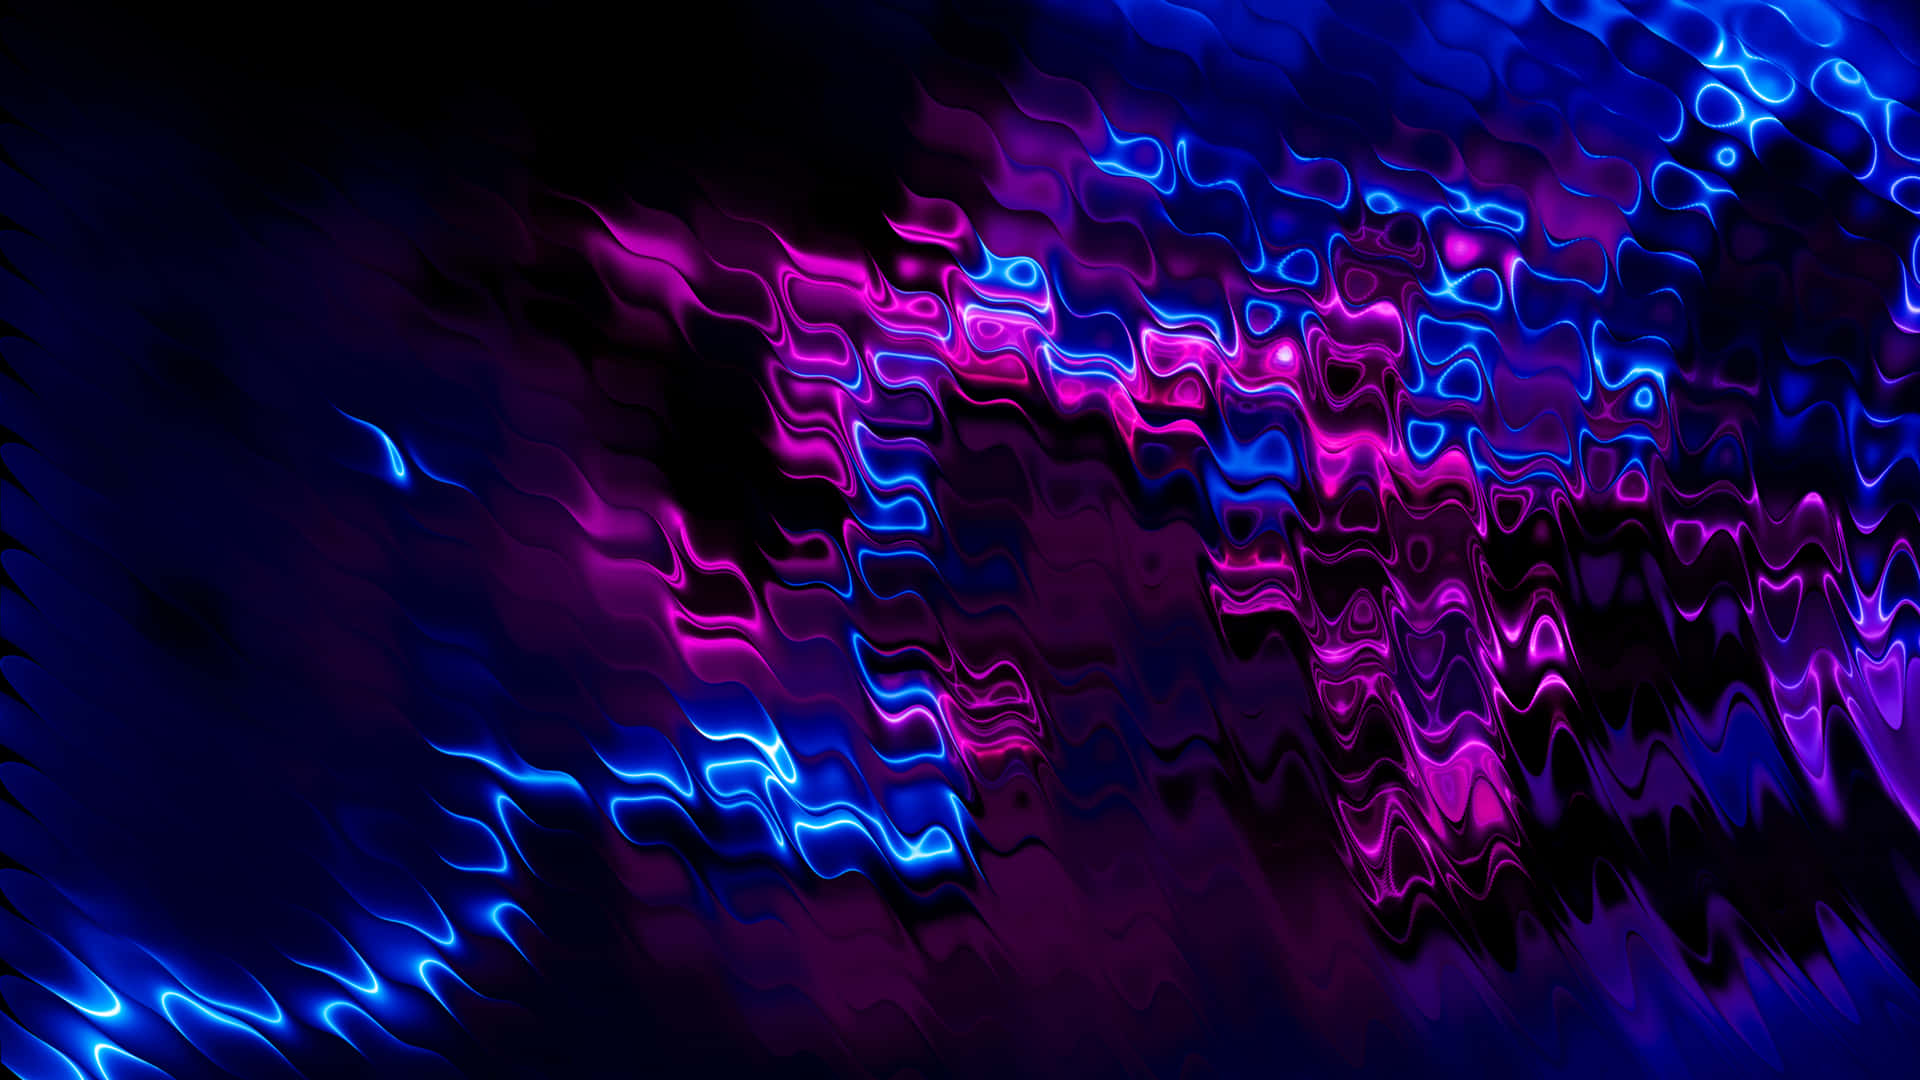 Enjoy the colorful glimpse of the Blue Purple Desktop Wallpaper